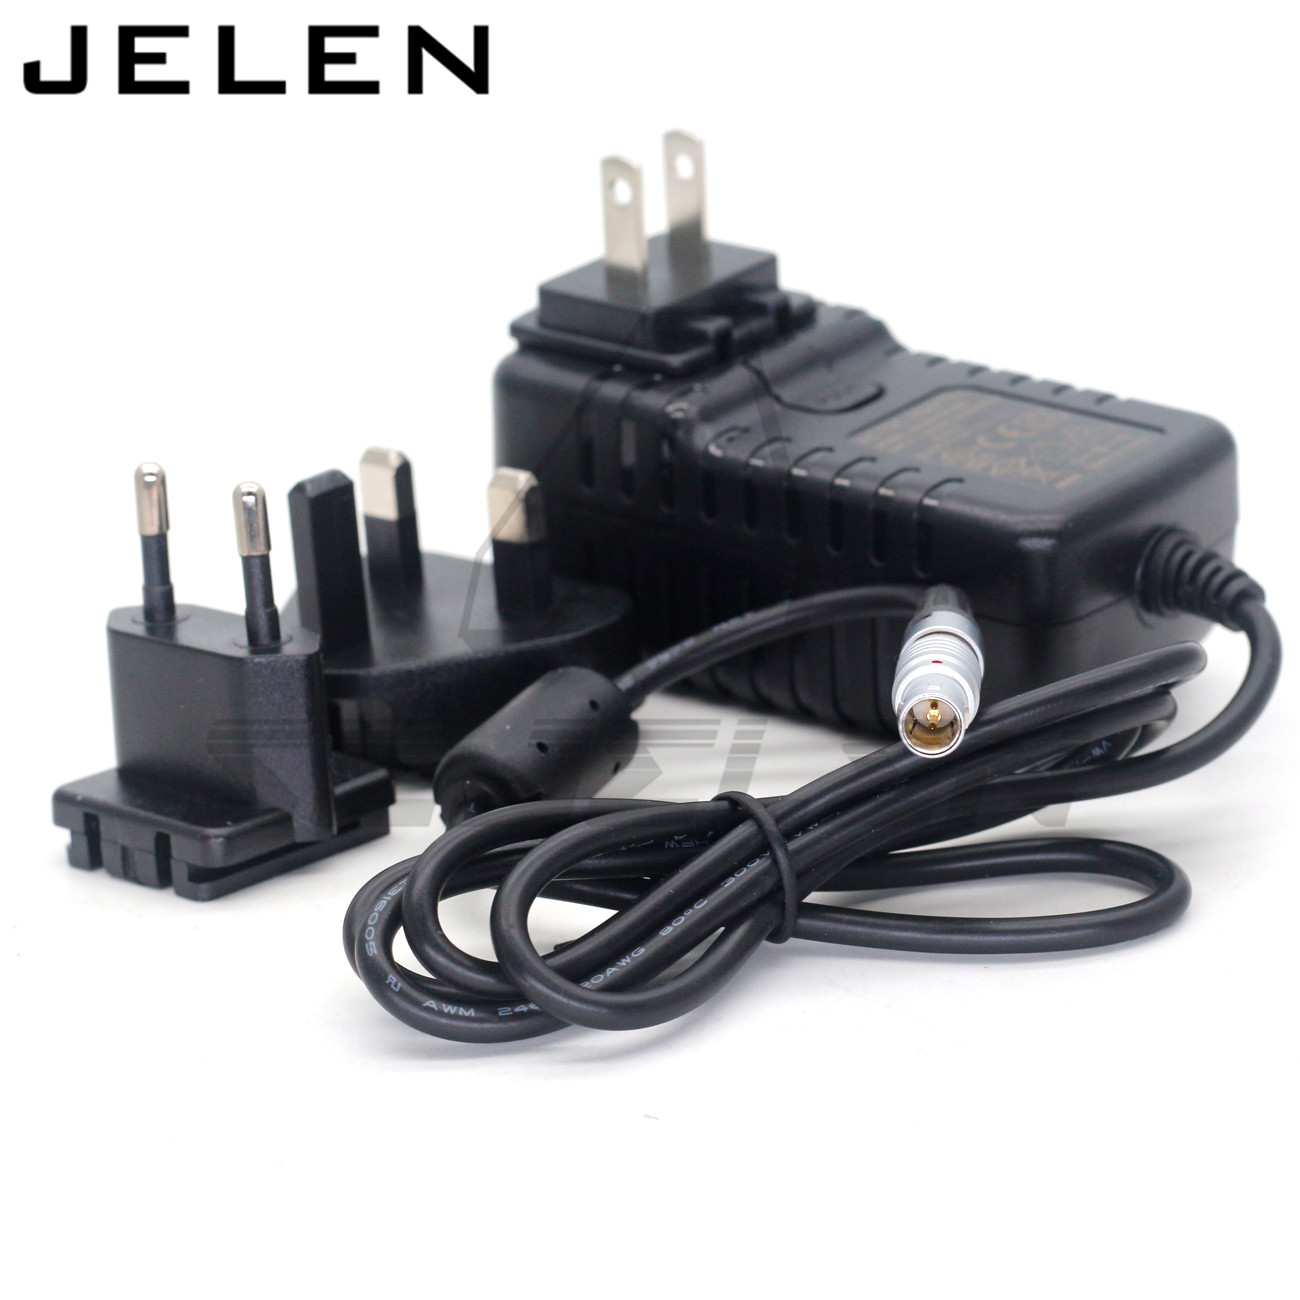 American and European regulations 110 220V adapter to 12V 2 pin elbow Weigu image transmission power cord Teradek polaishop 3